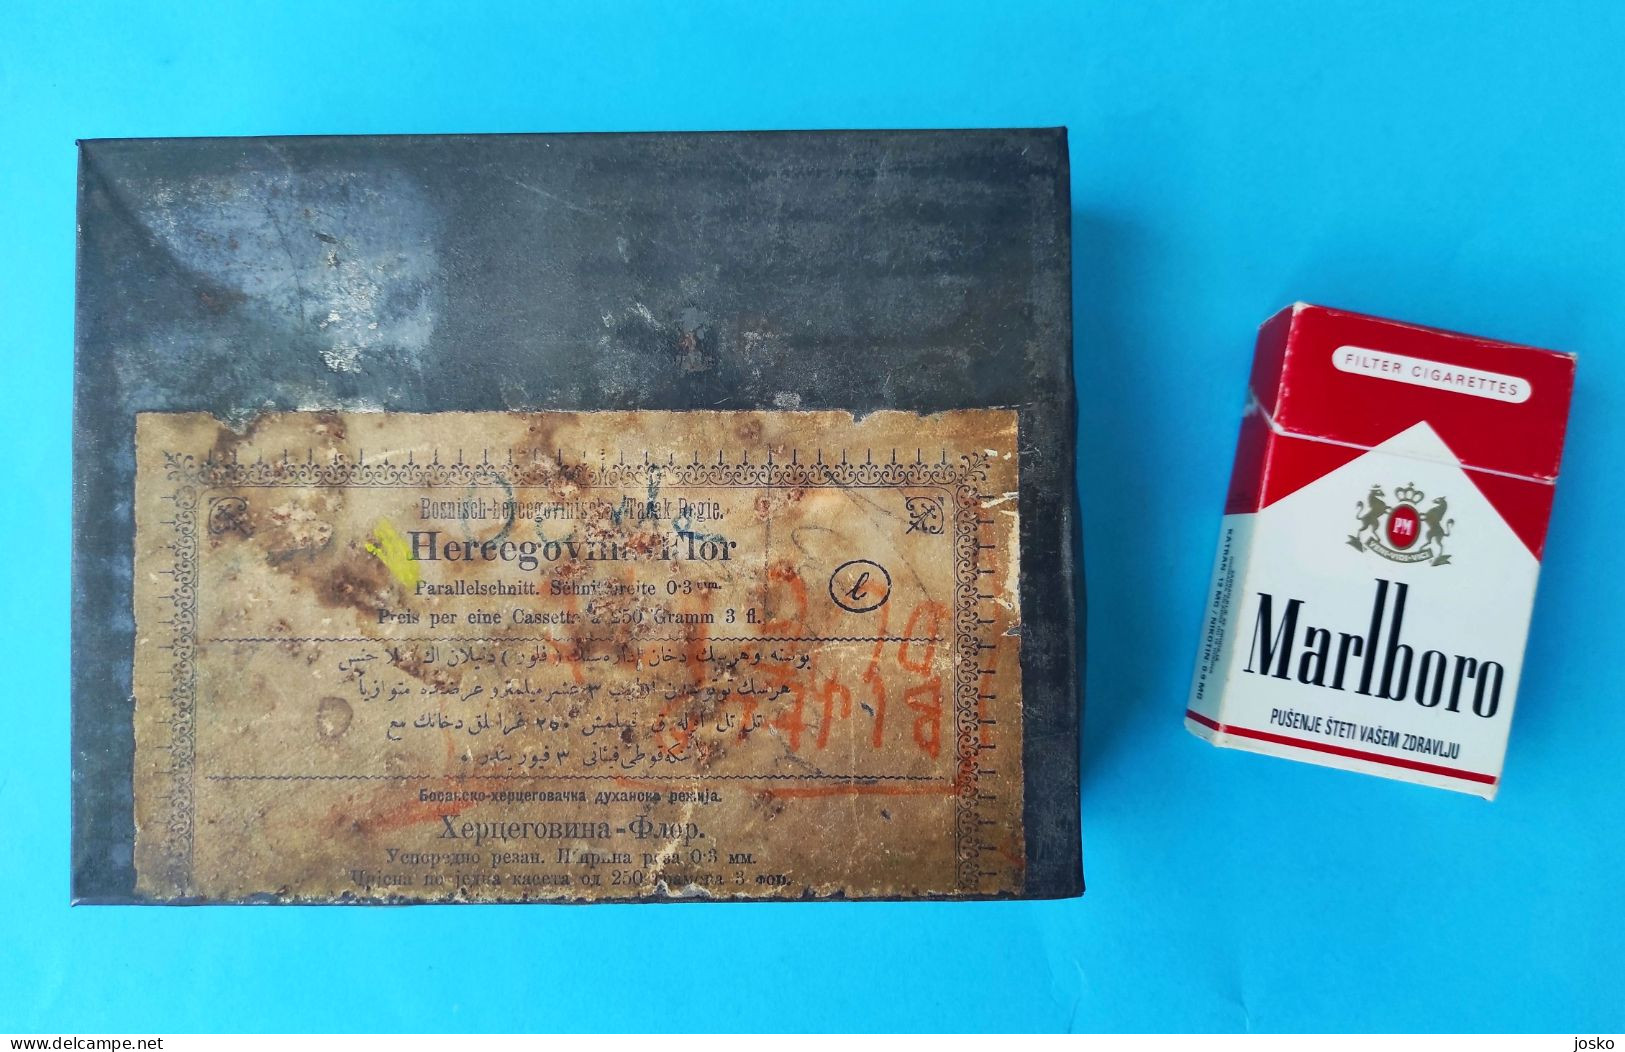 HERCEGOVINA FLOR - Bosnia And Herzegovina Antique Tobacco Tin Box (1883.y.) * Tabak Tabac Tabacco Tabaco Cigarettes - Cajas Para Tabaco (vacios)